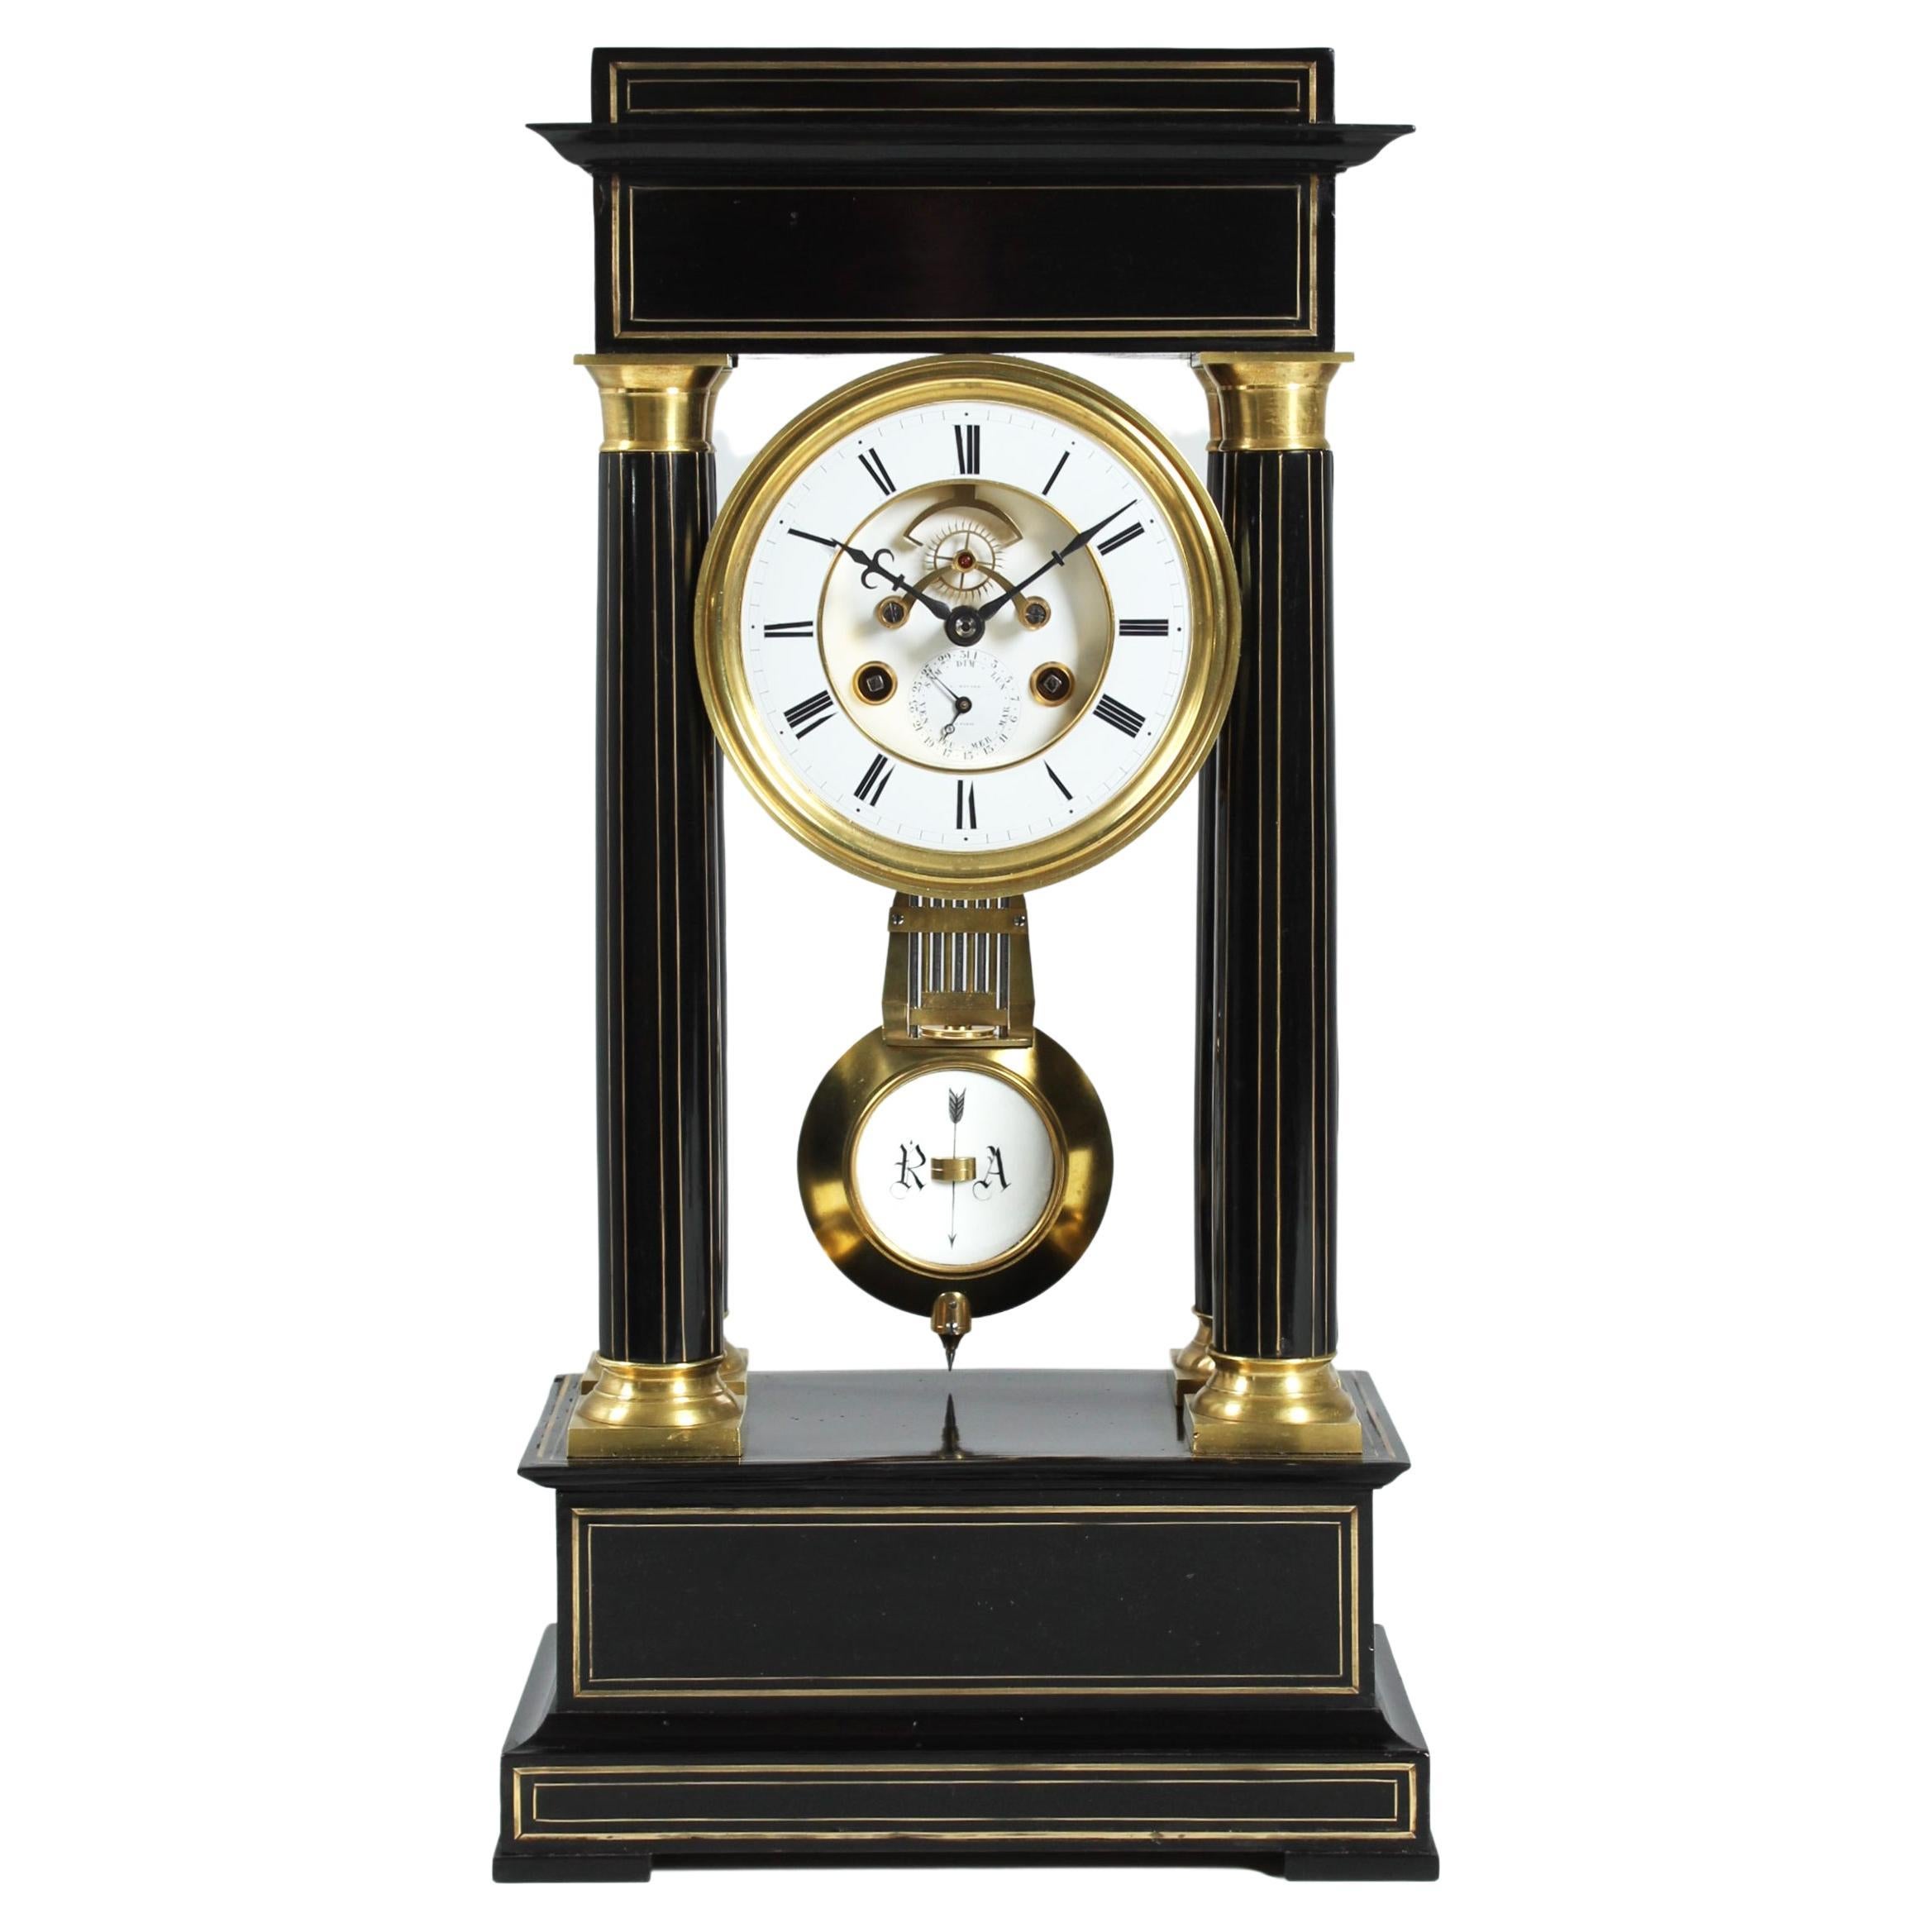 19th Century Portal Mantel Clock with Date and open Escapement, Paris, c. 1870